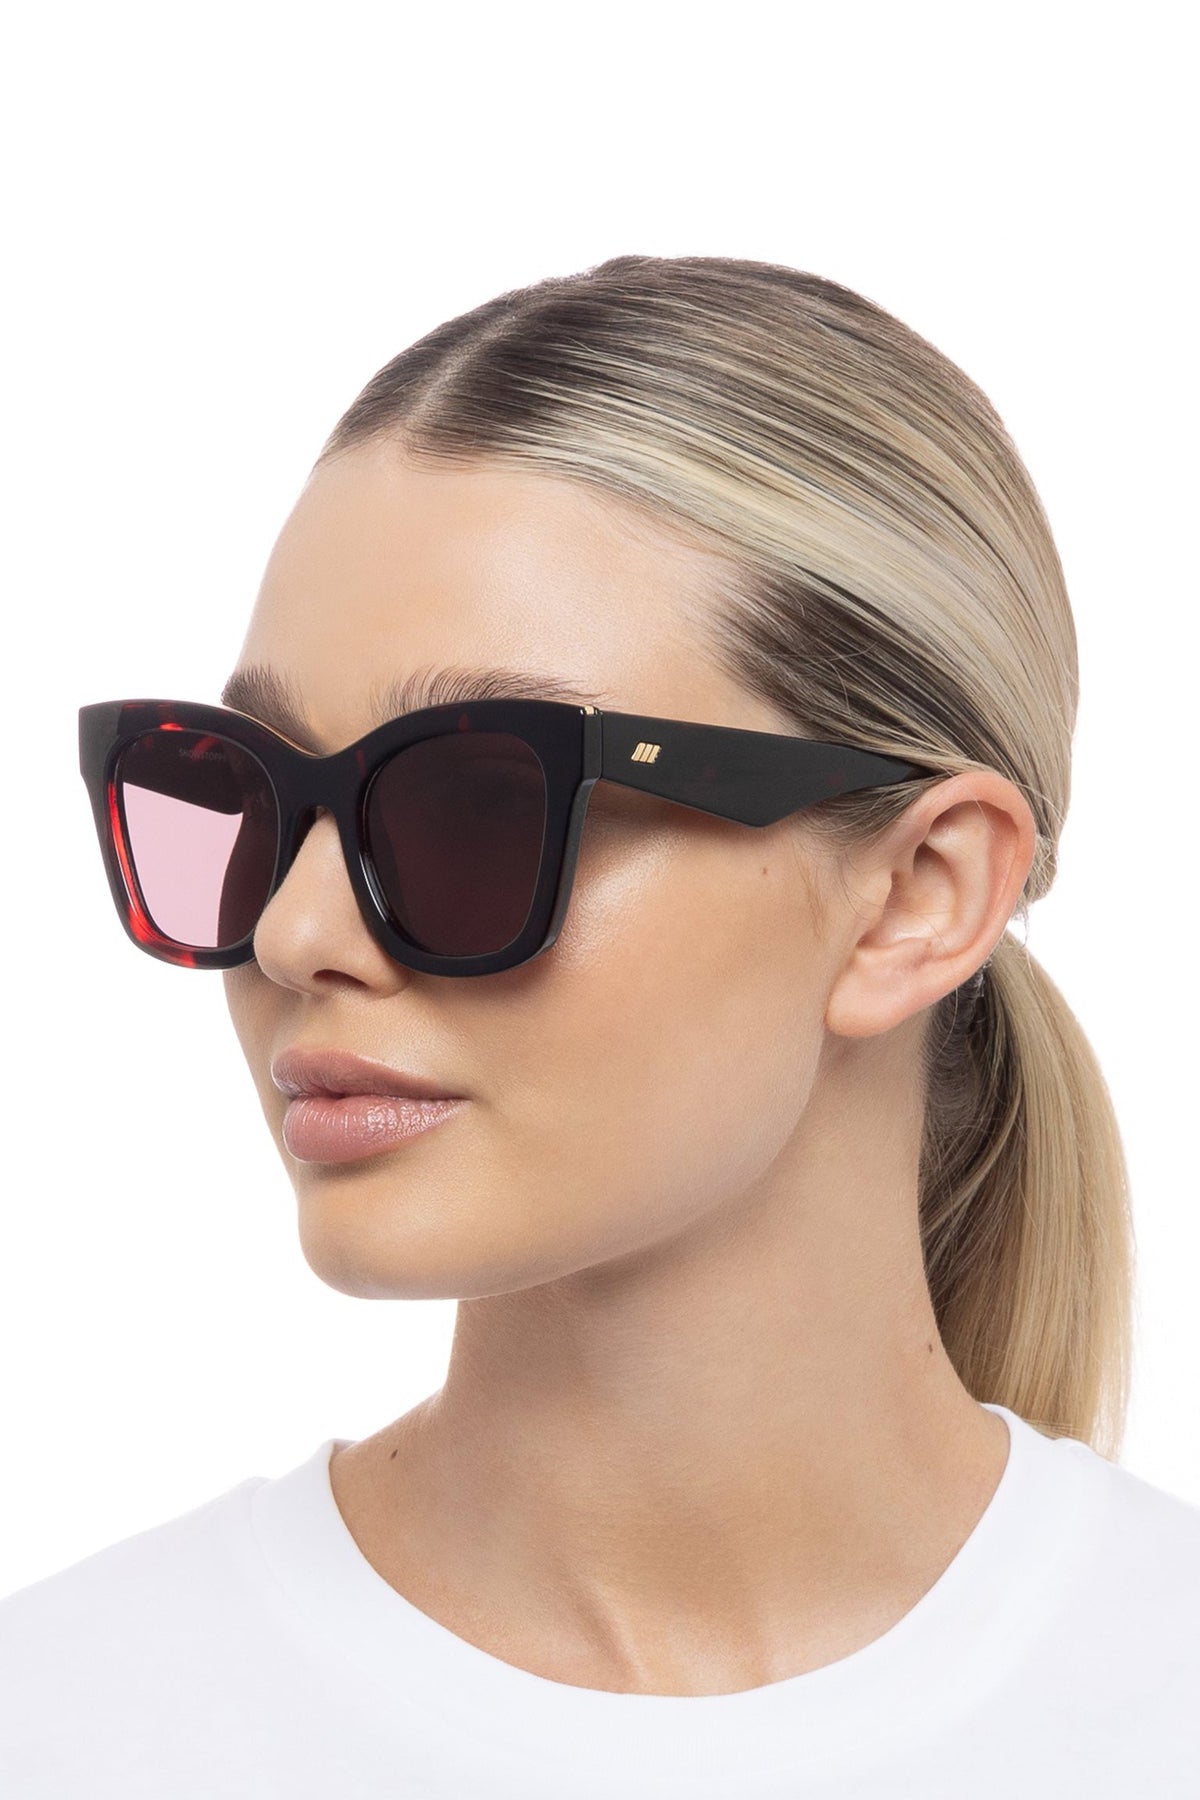 Le Specs Showstopper Sunglasses - Cherry Tort - RUM Amsterdam